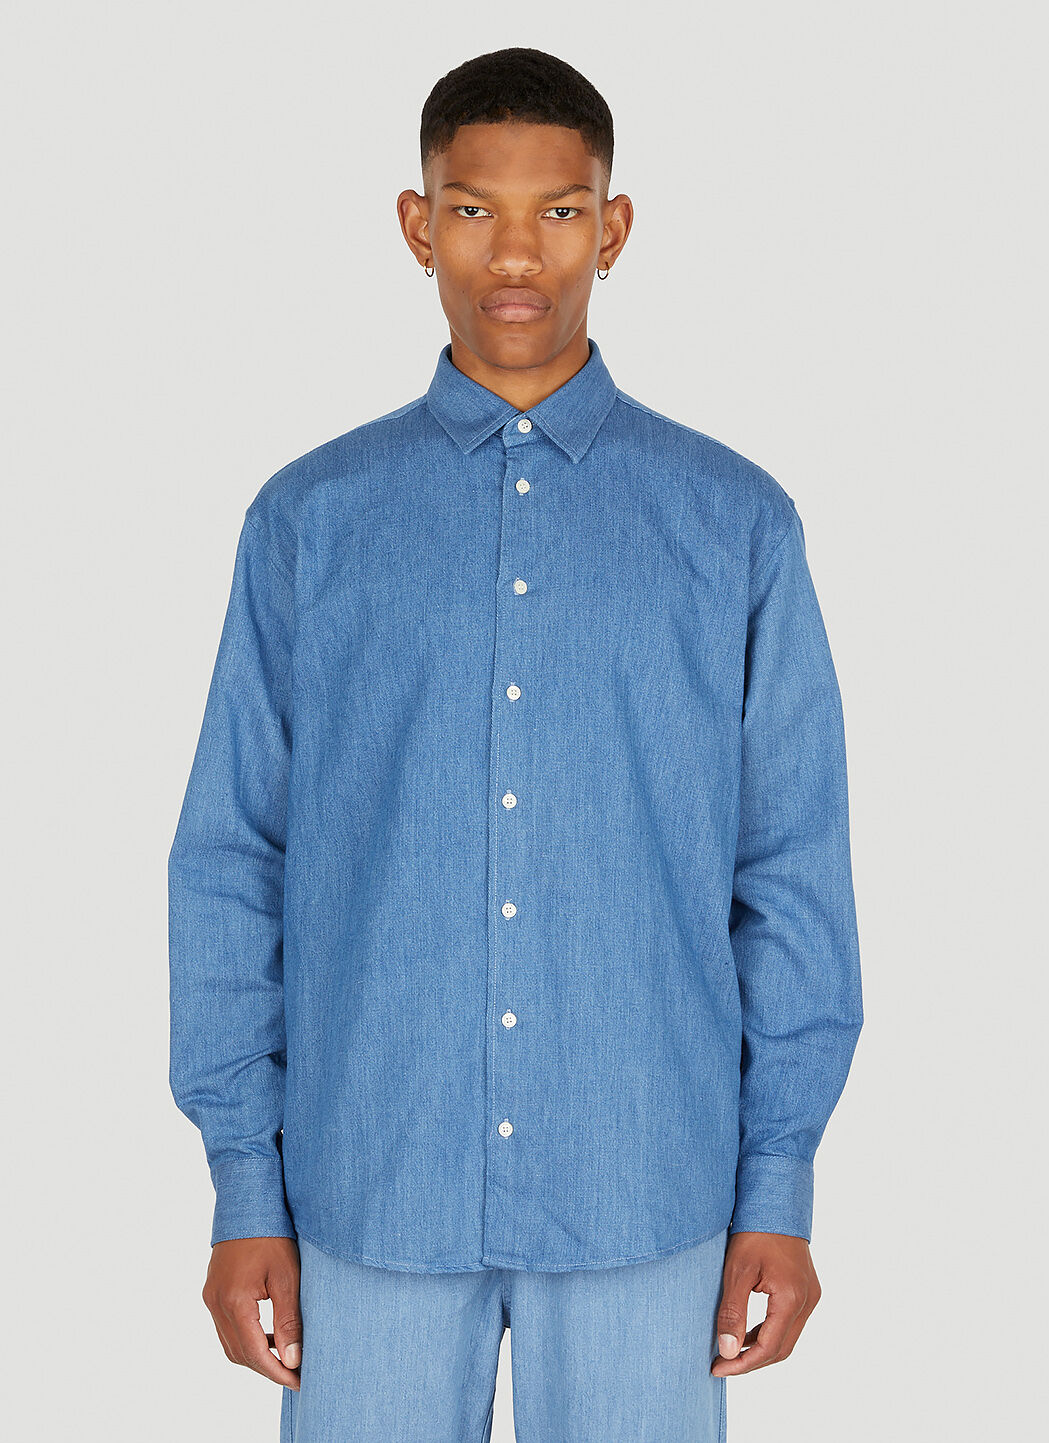 Soulland Damon Shirt Blue sld0352002